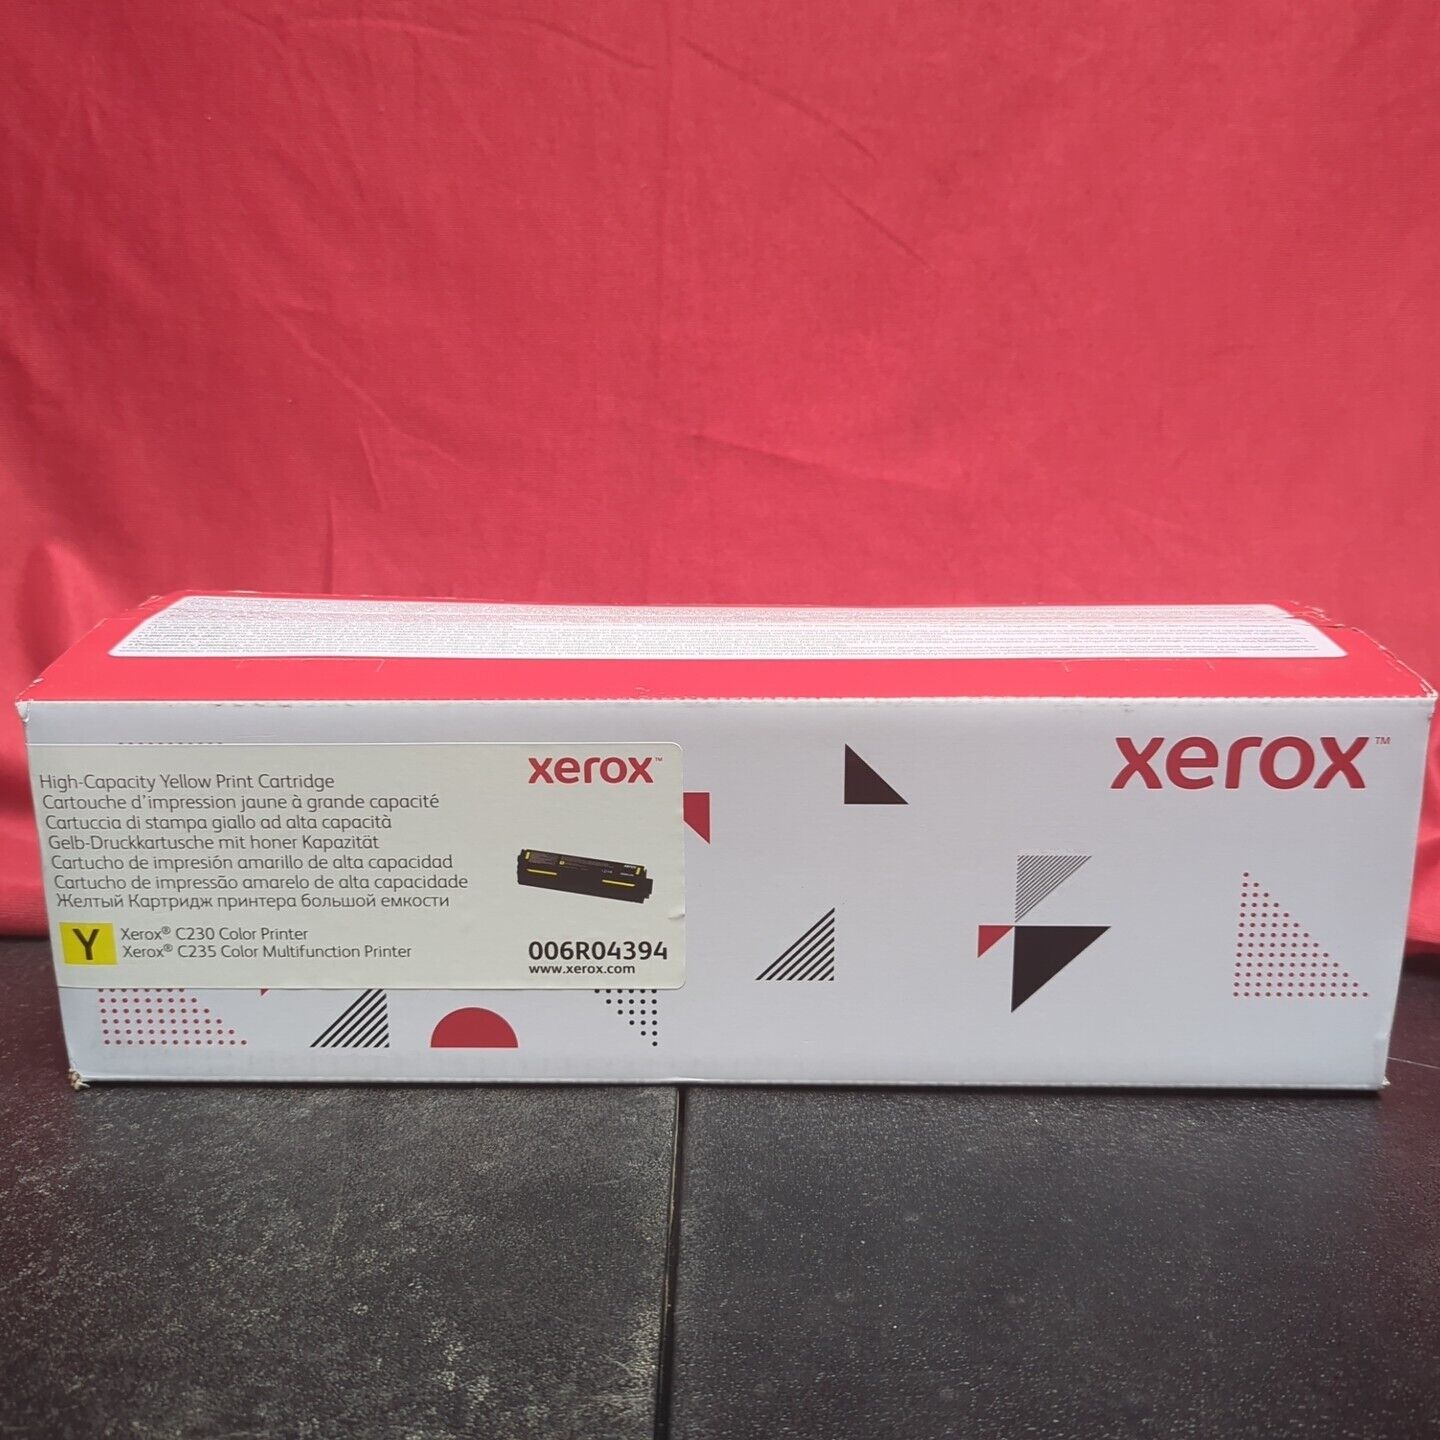 GENUINE Xerox 006R04394 Yellow High Capacity Print Cartridge for C230/C235 Color